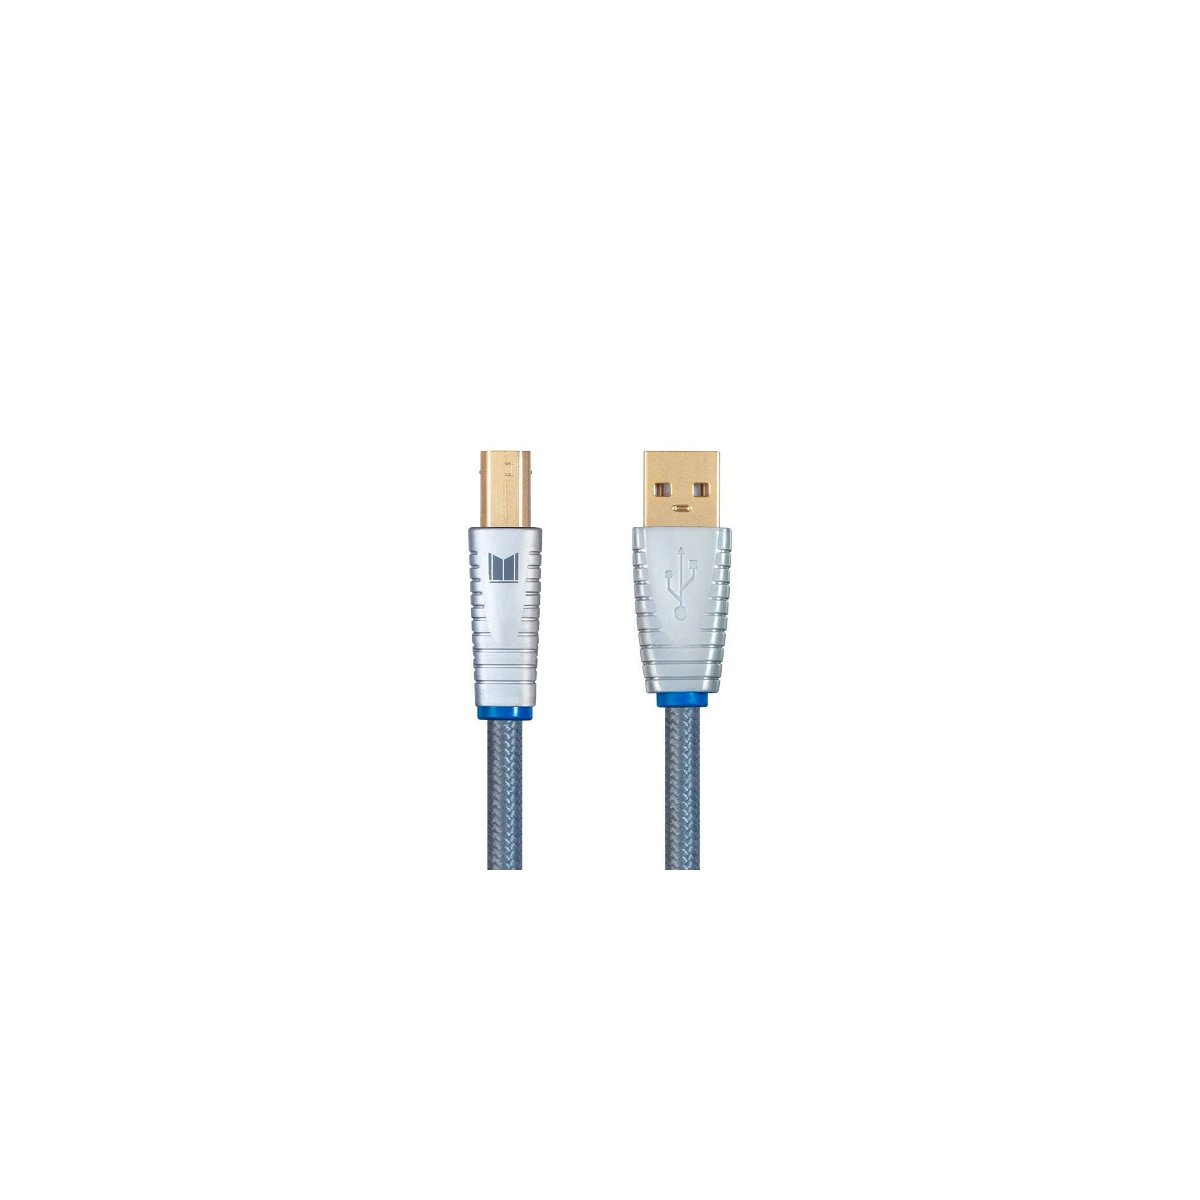 Digital Monoprice Monolith by Monoprice USB Audio Cable USB Type-A to USB Type-B 1m